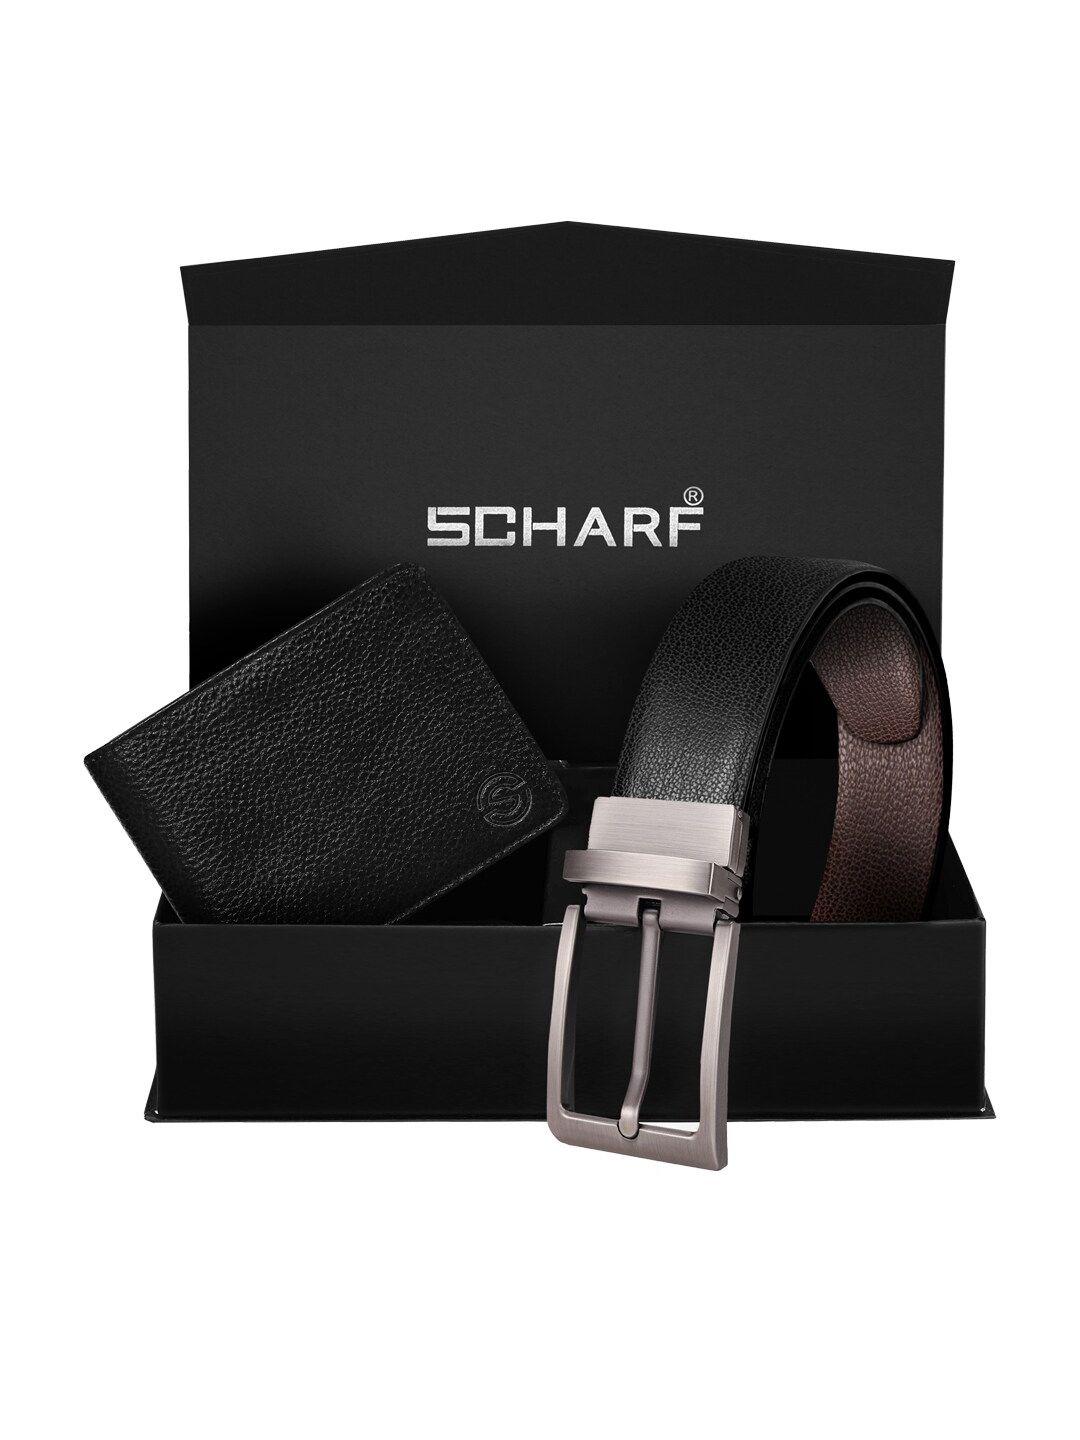 scharf men black & brown leather accessory gift set